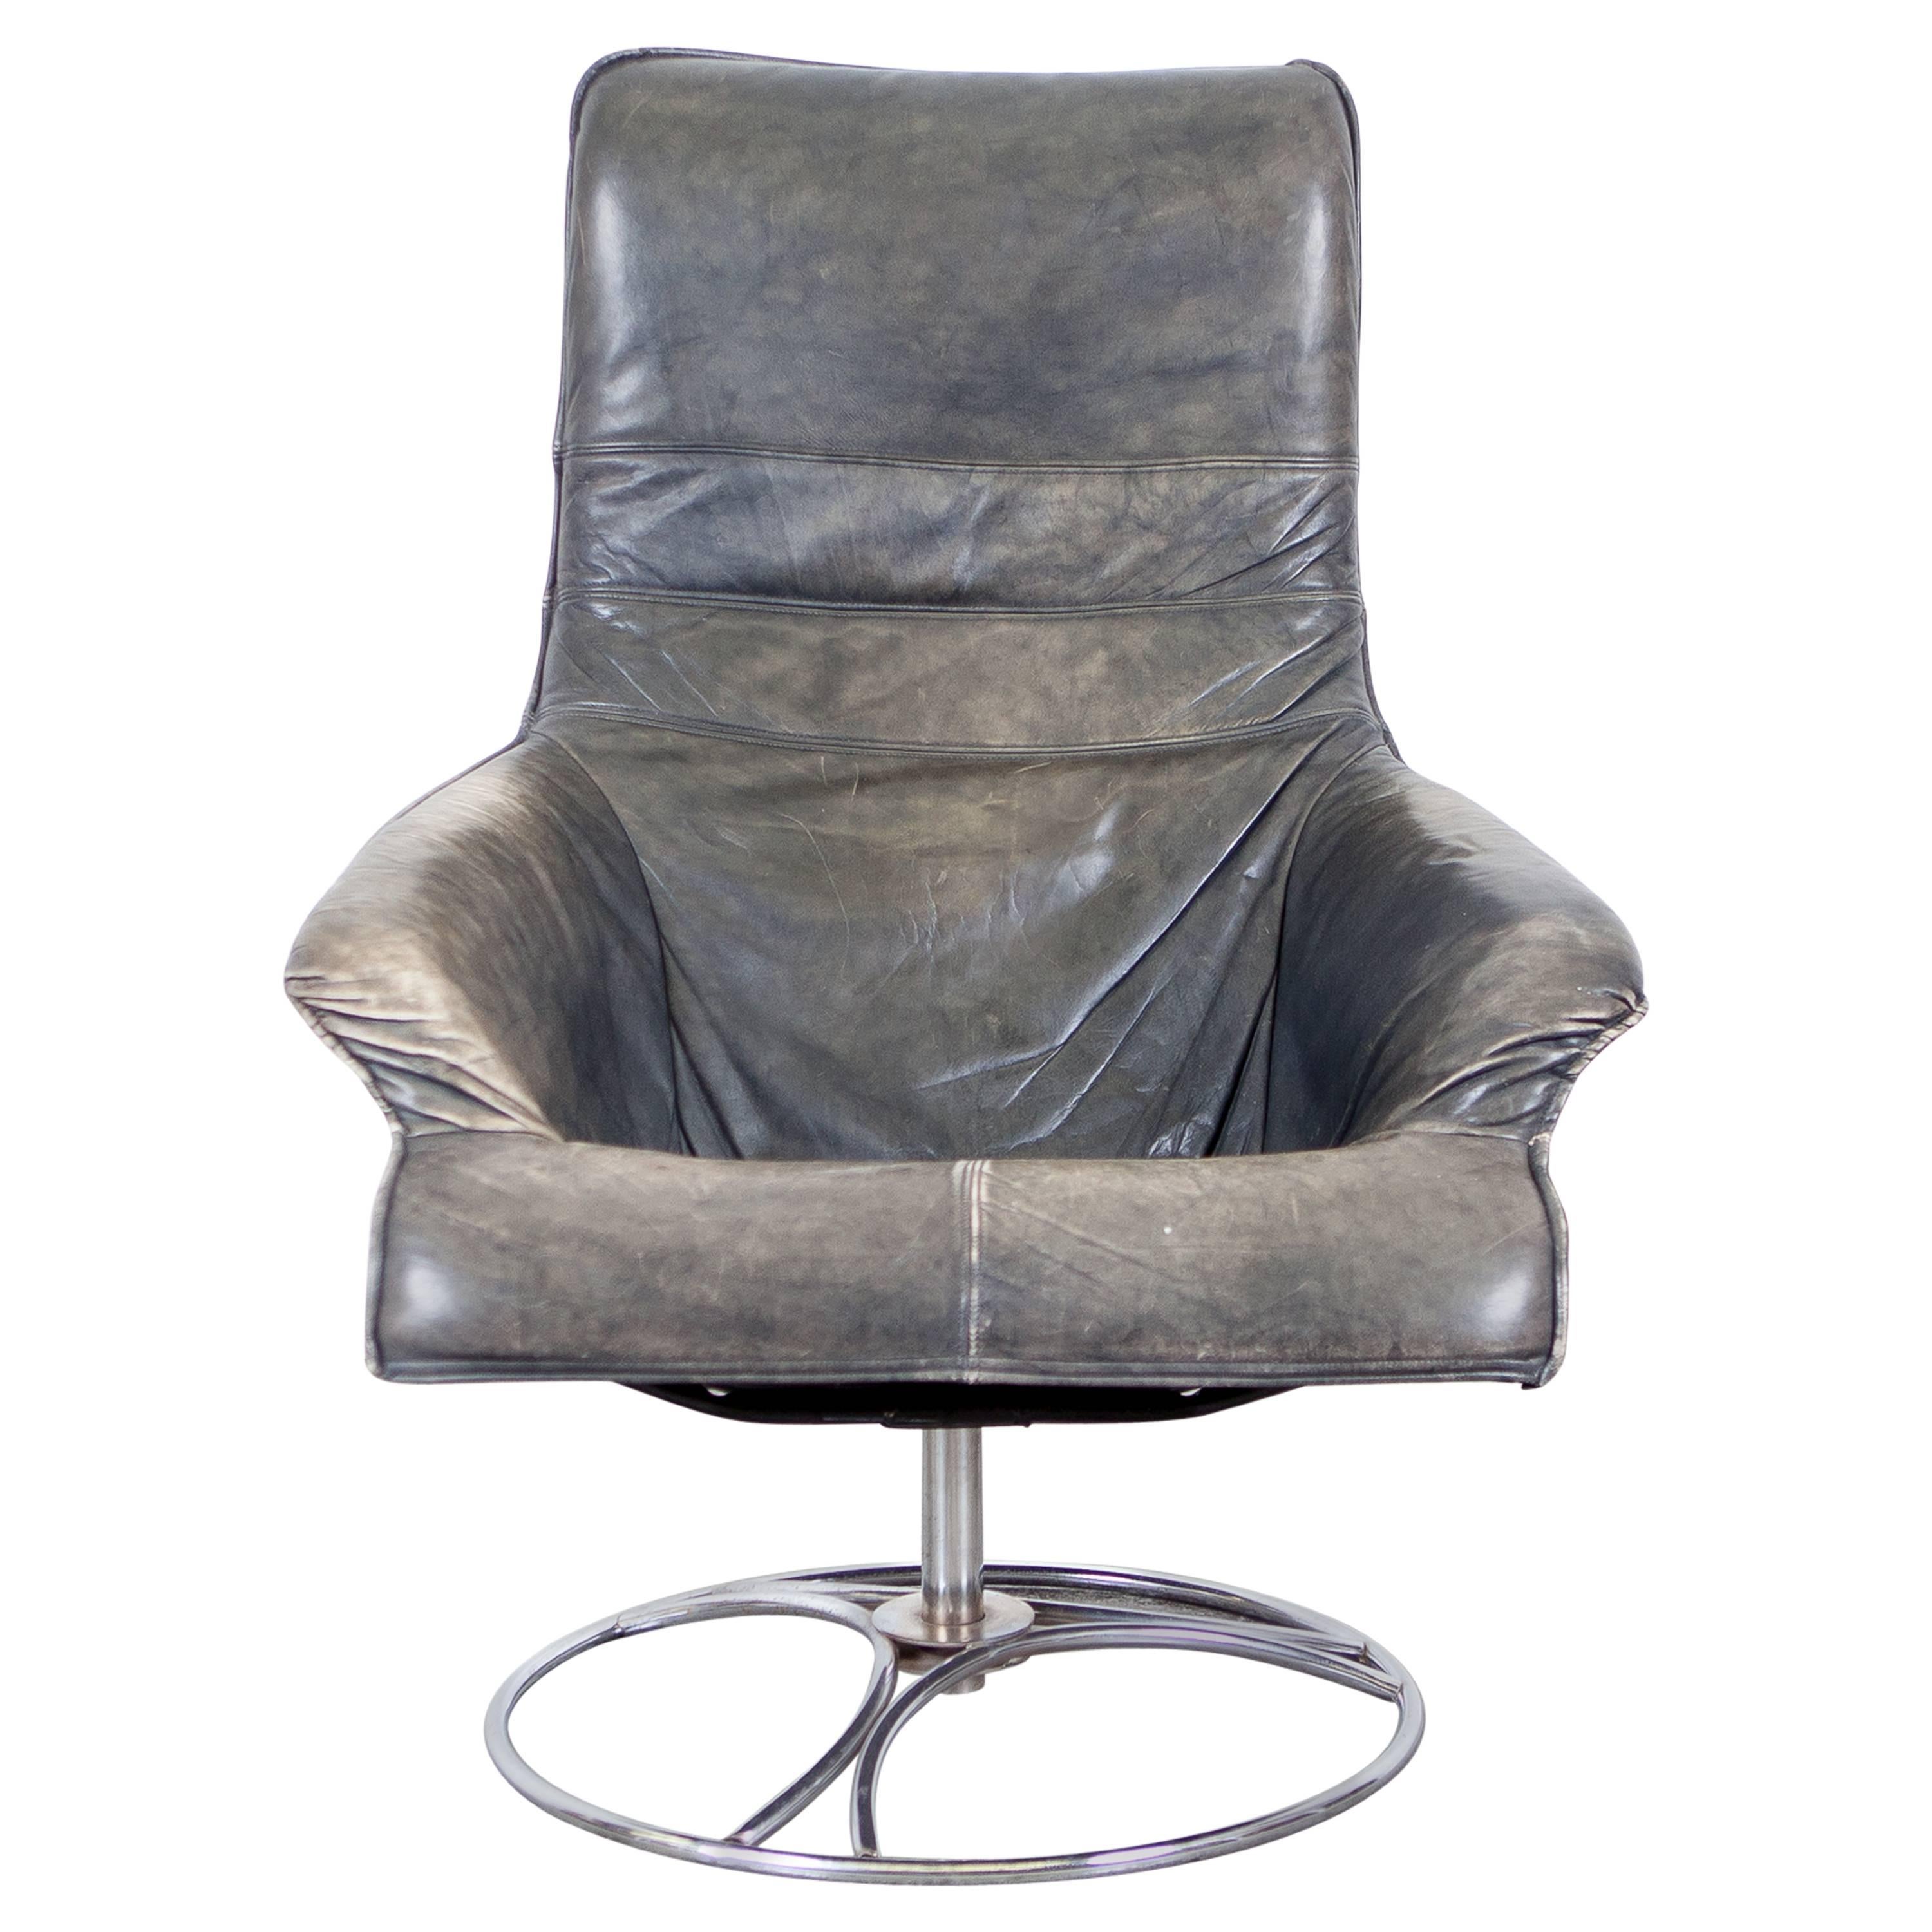 Swedish Mid-Century Lounge Chair with Chrome Swivel Base